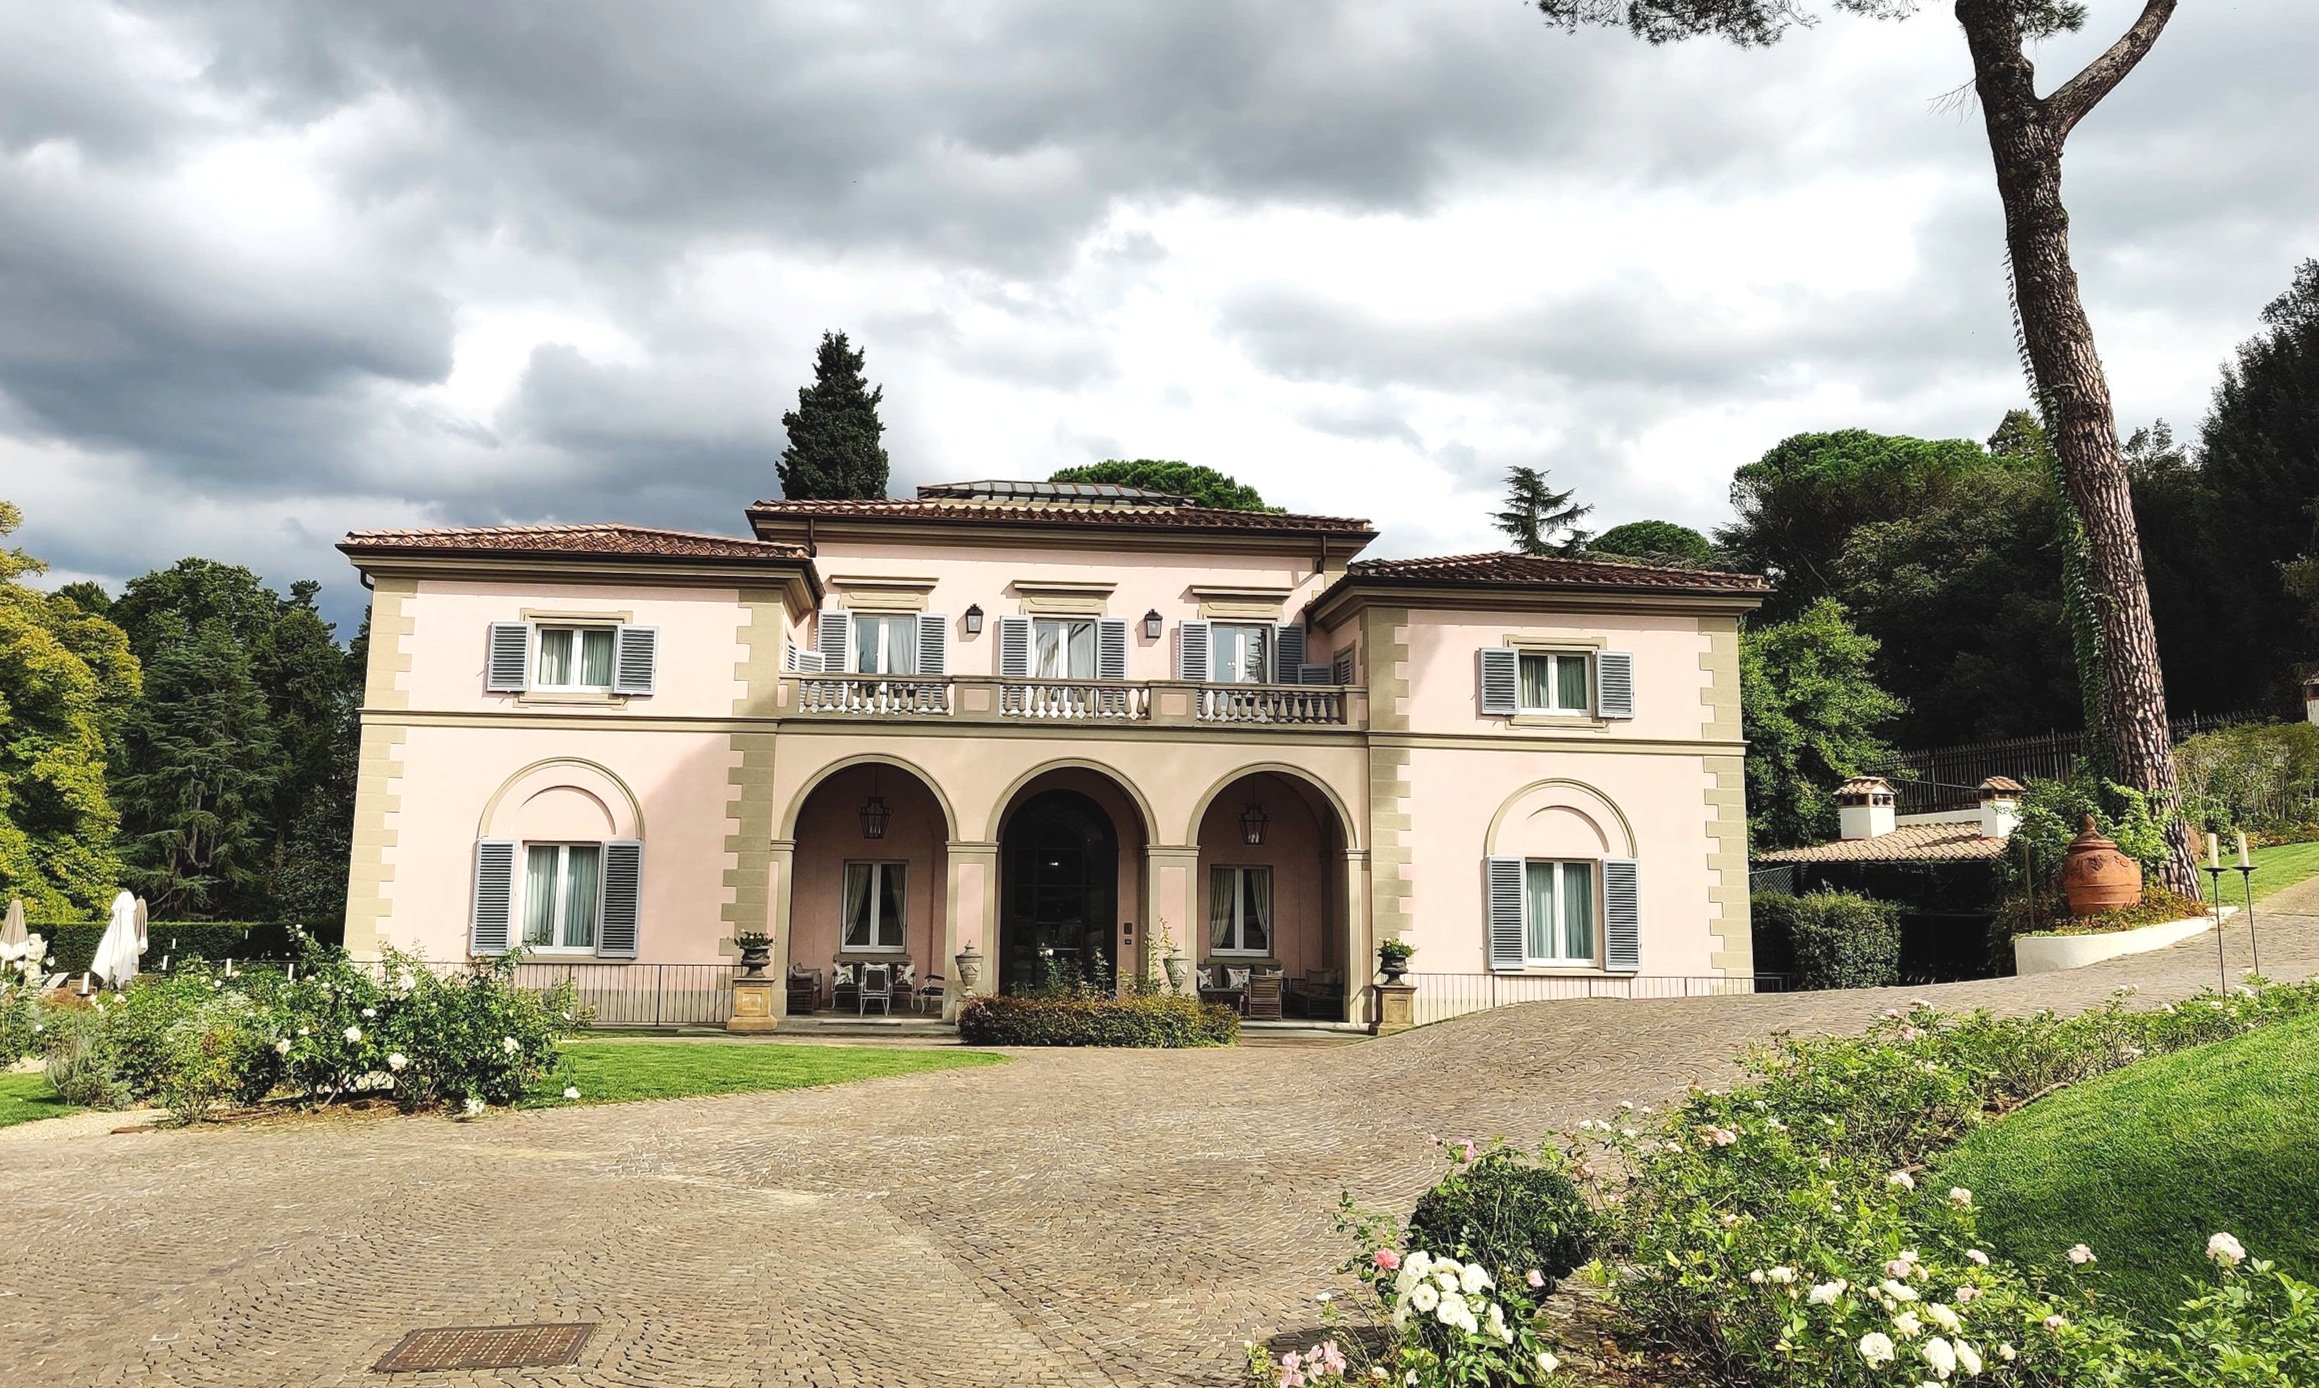 Villa Cora Florence, Italy review